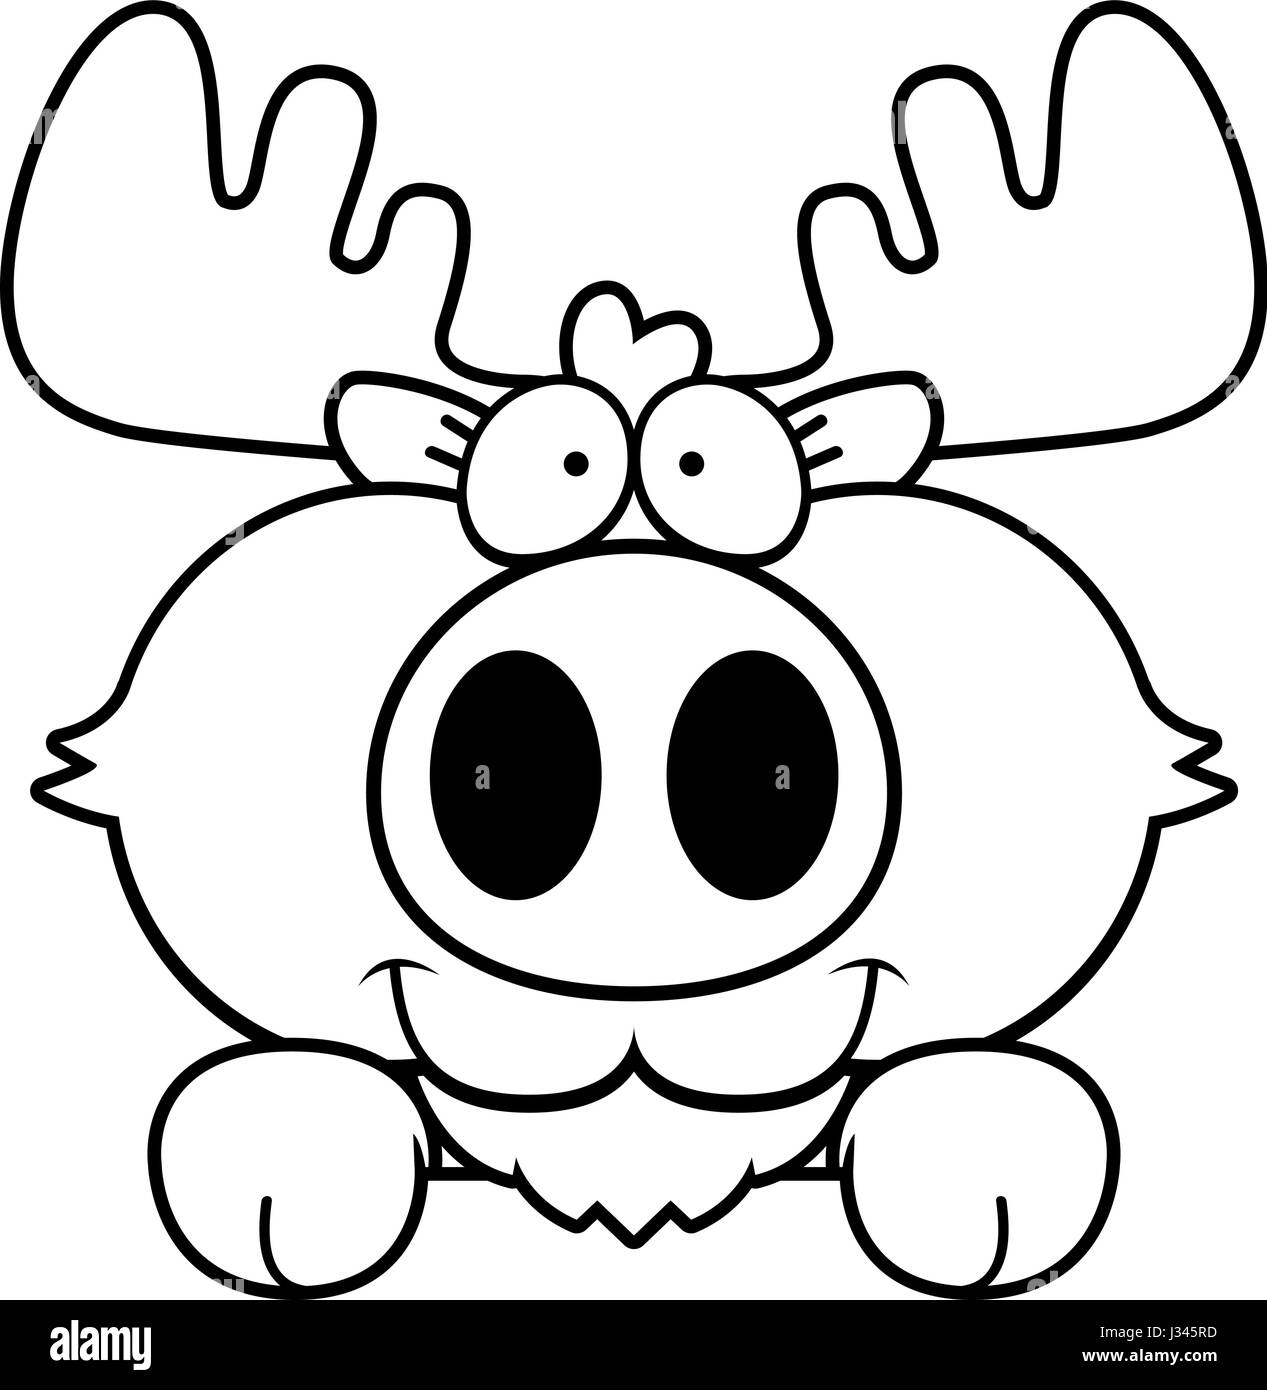 A cartoon illustration of a moose peeking over an object. Stock Vector